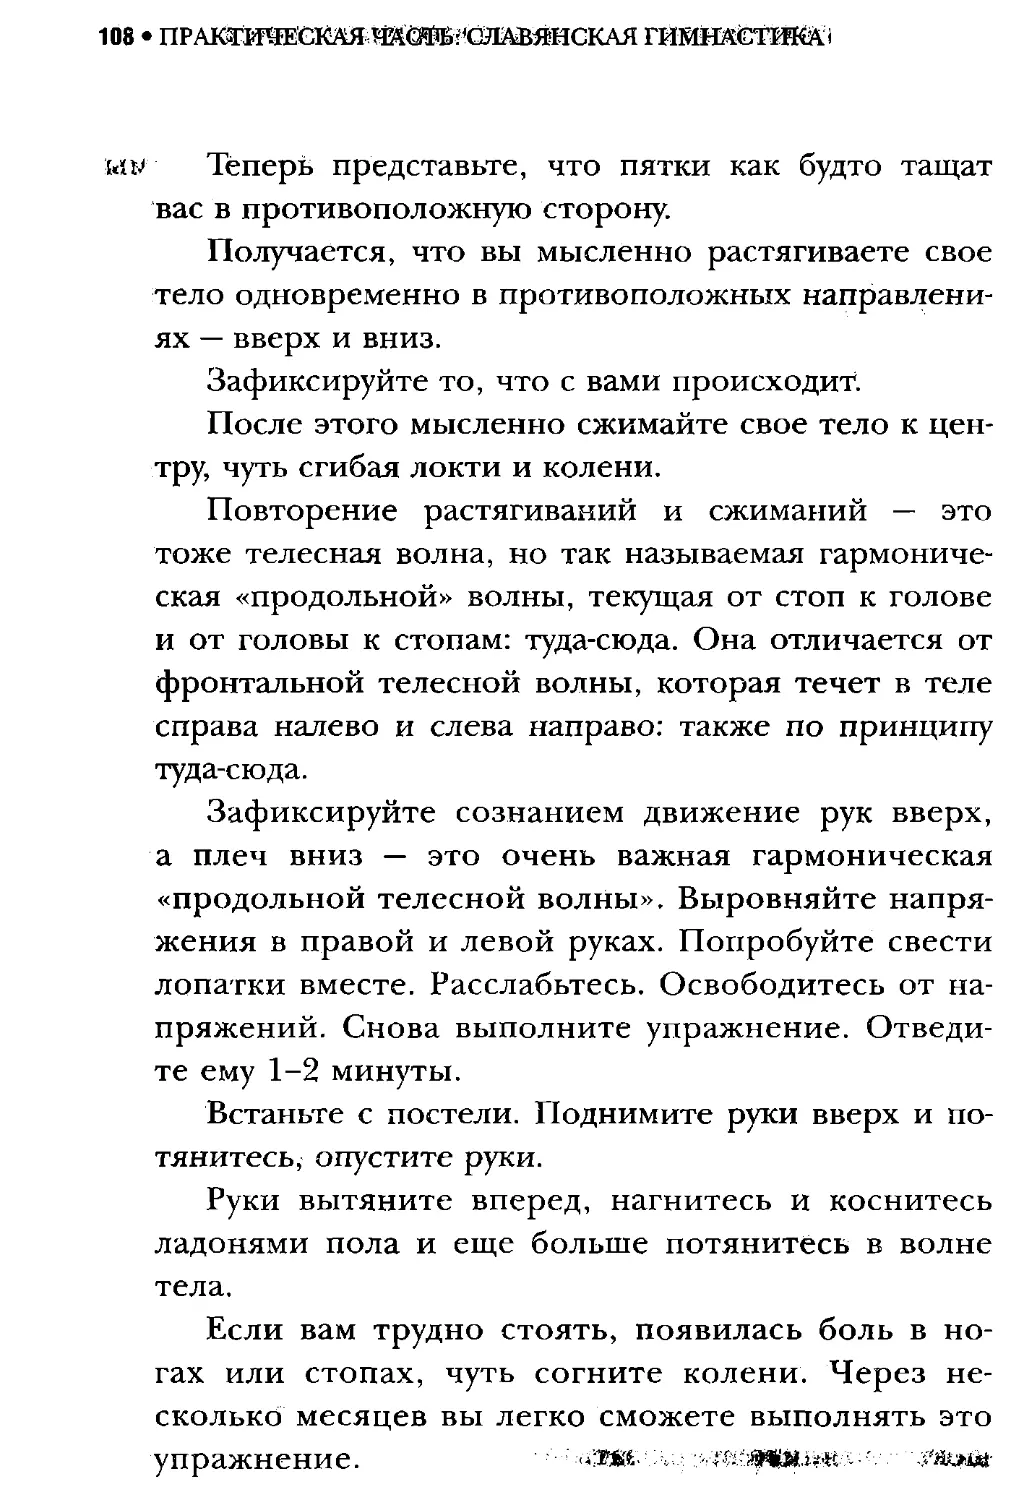 ﻿СлавянеТекст_page0054_1